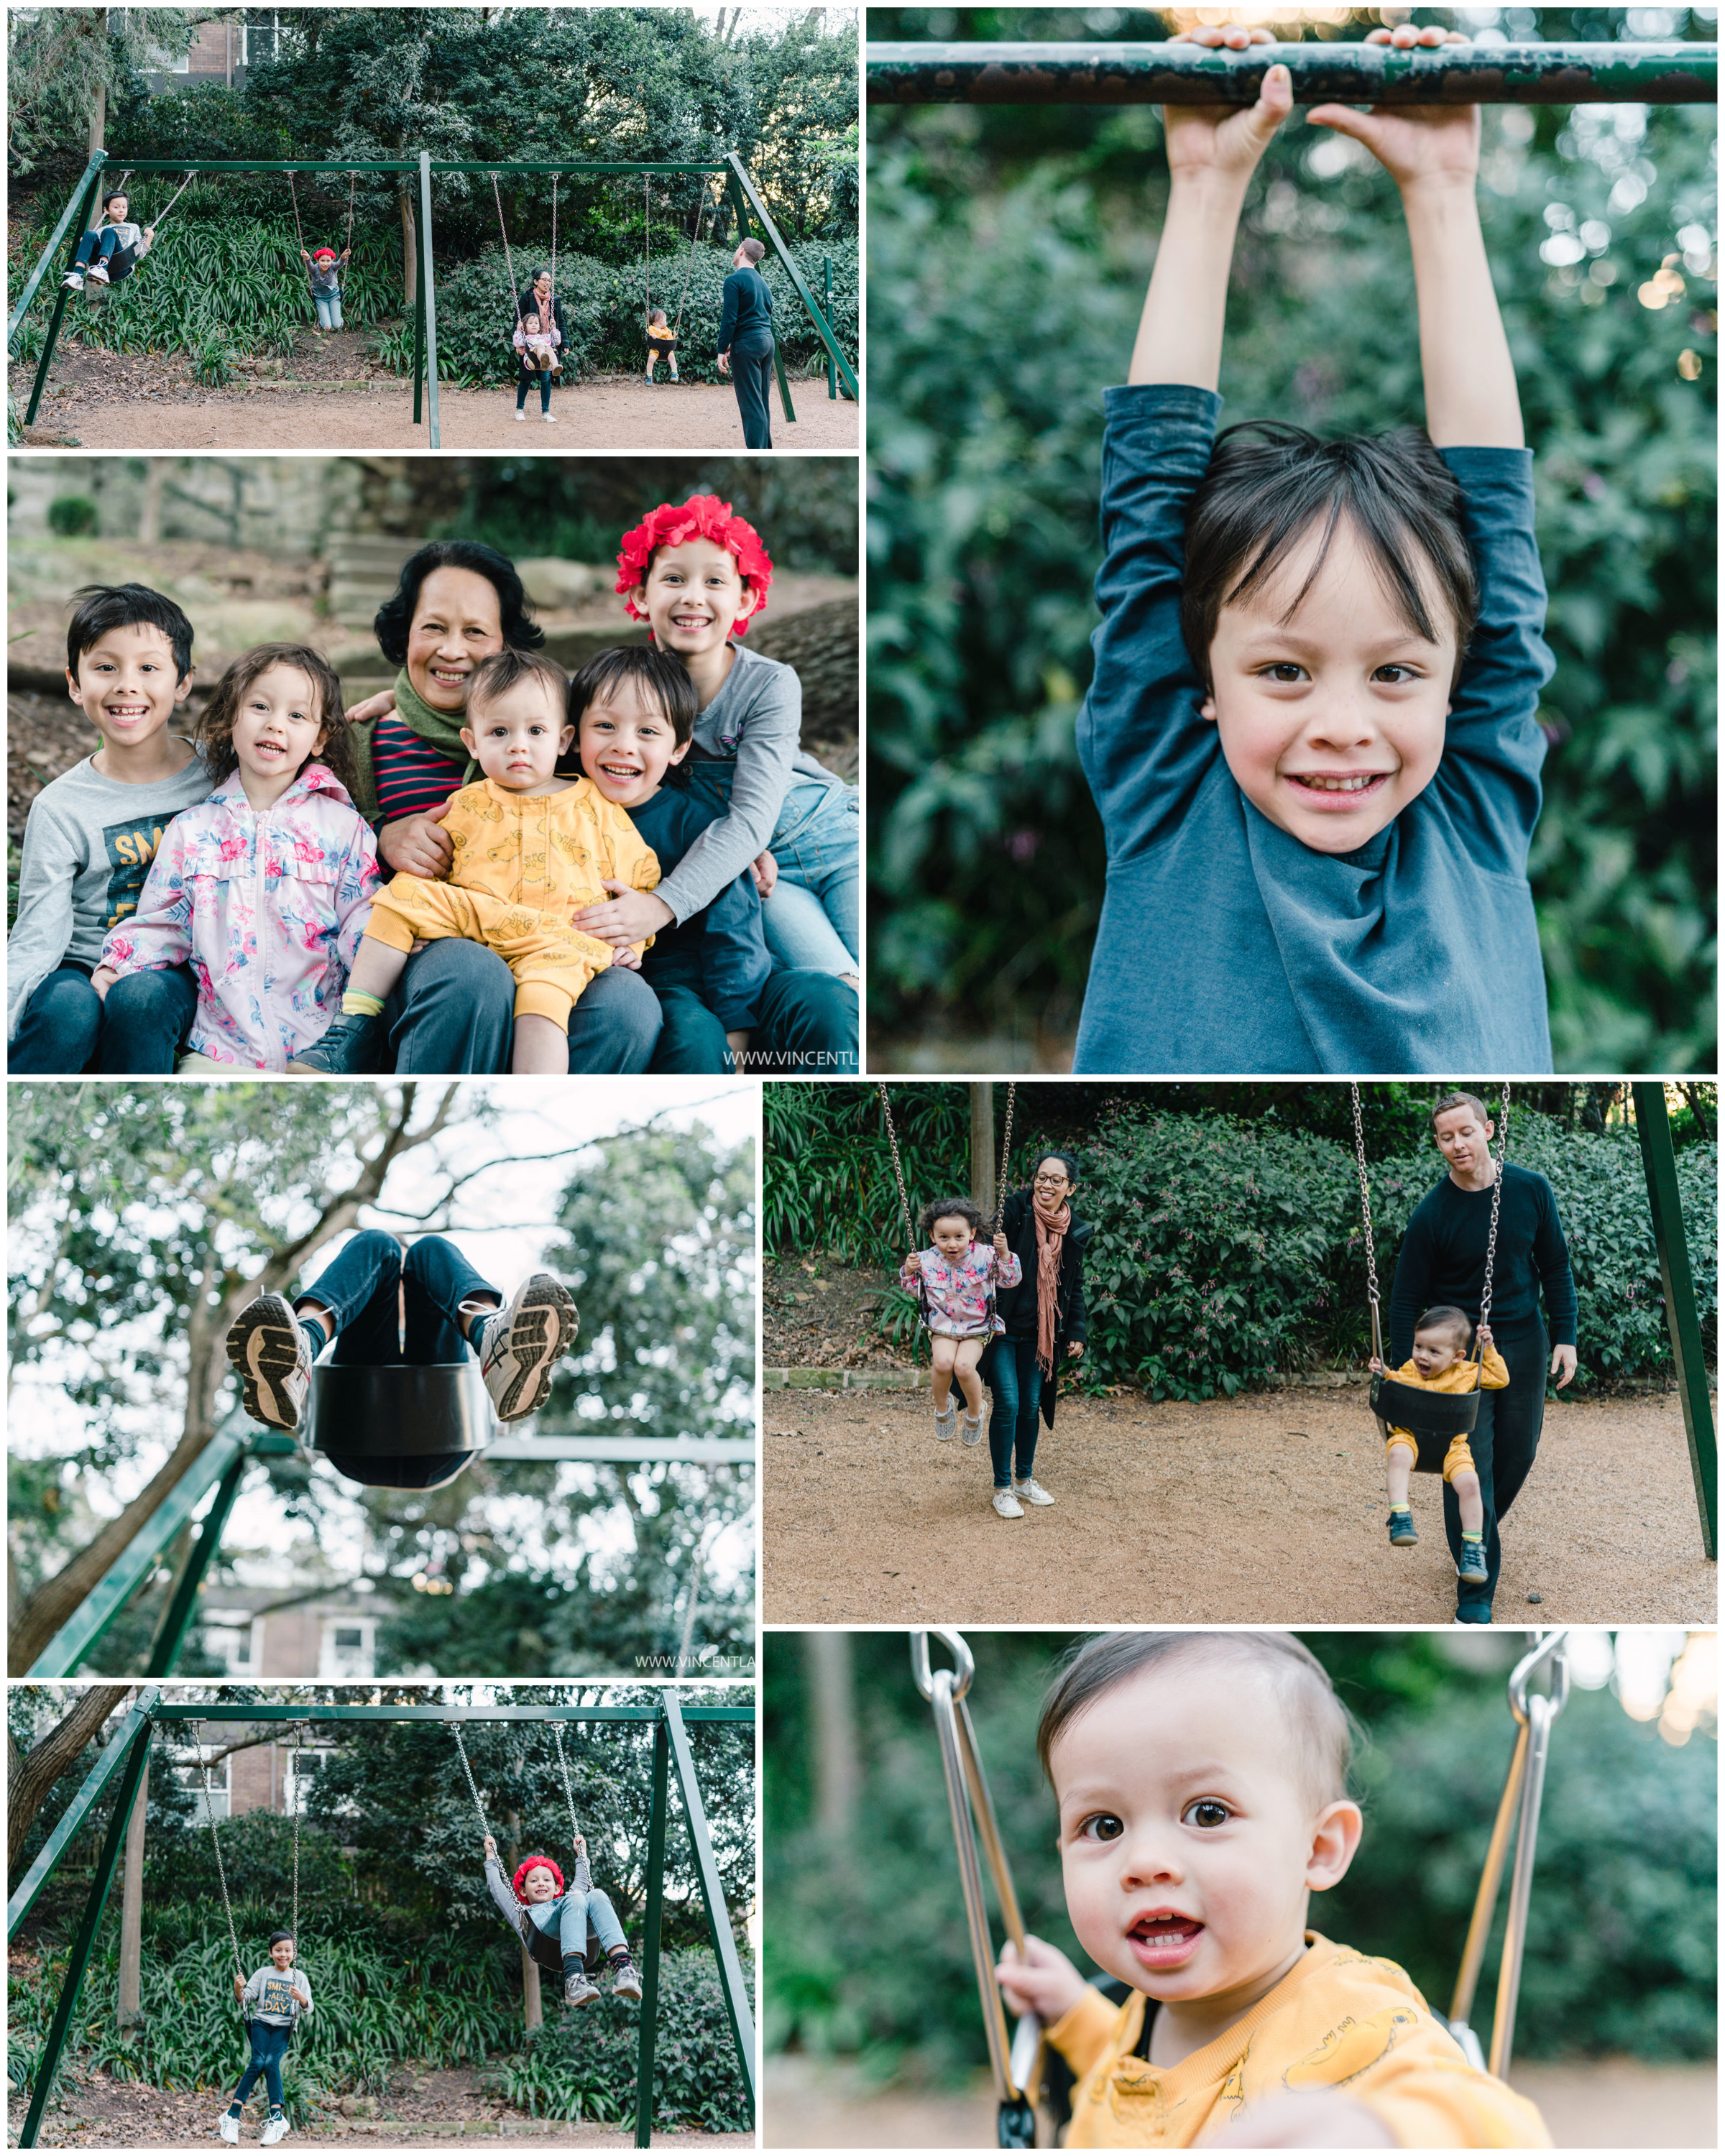 Family Photos at Watt Park North Sydney